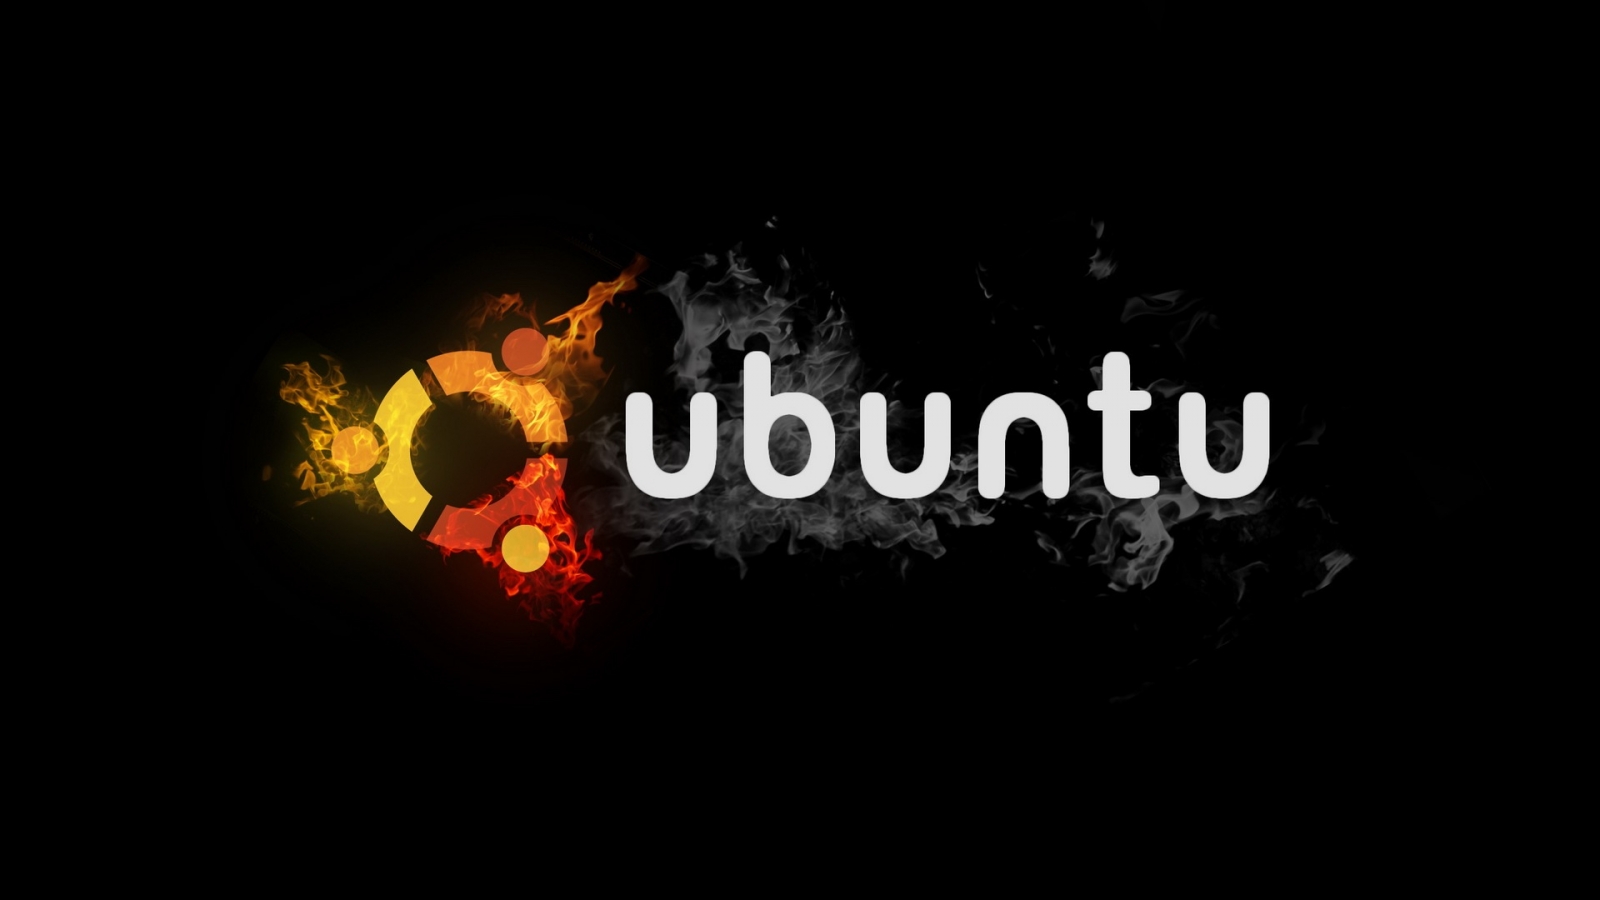 Ubuntu Wallpaper Pictures